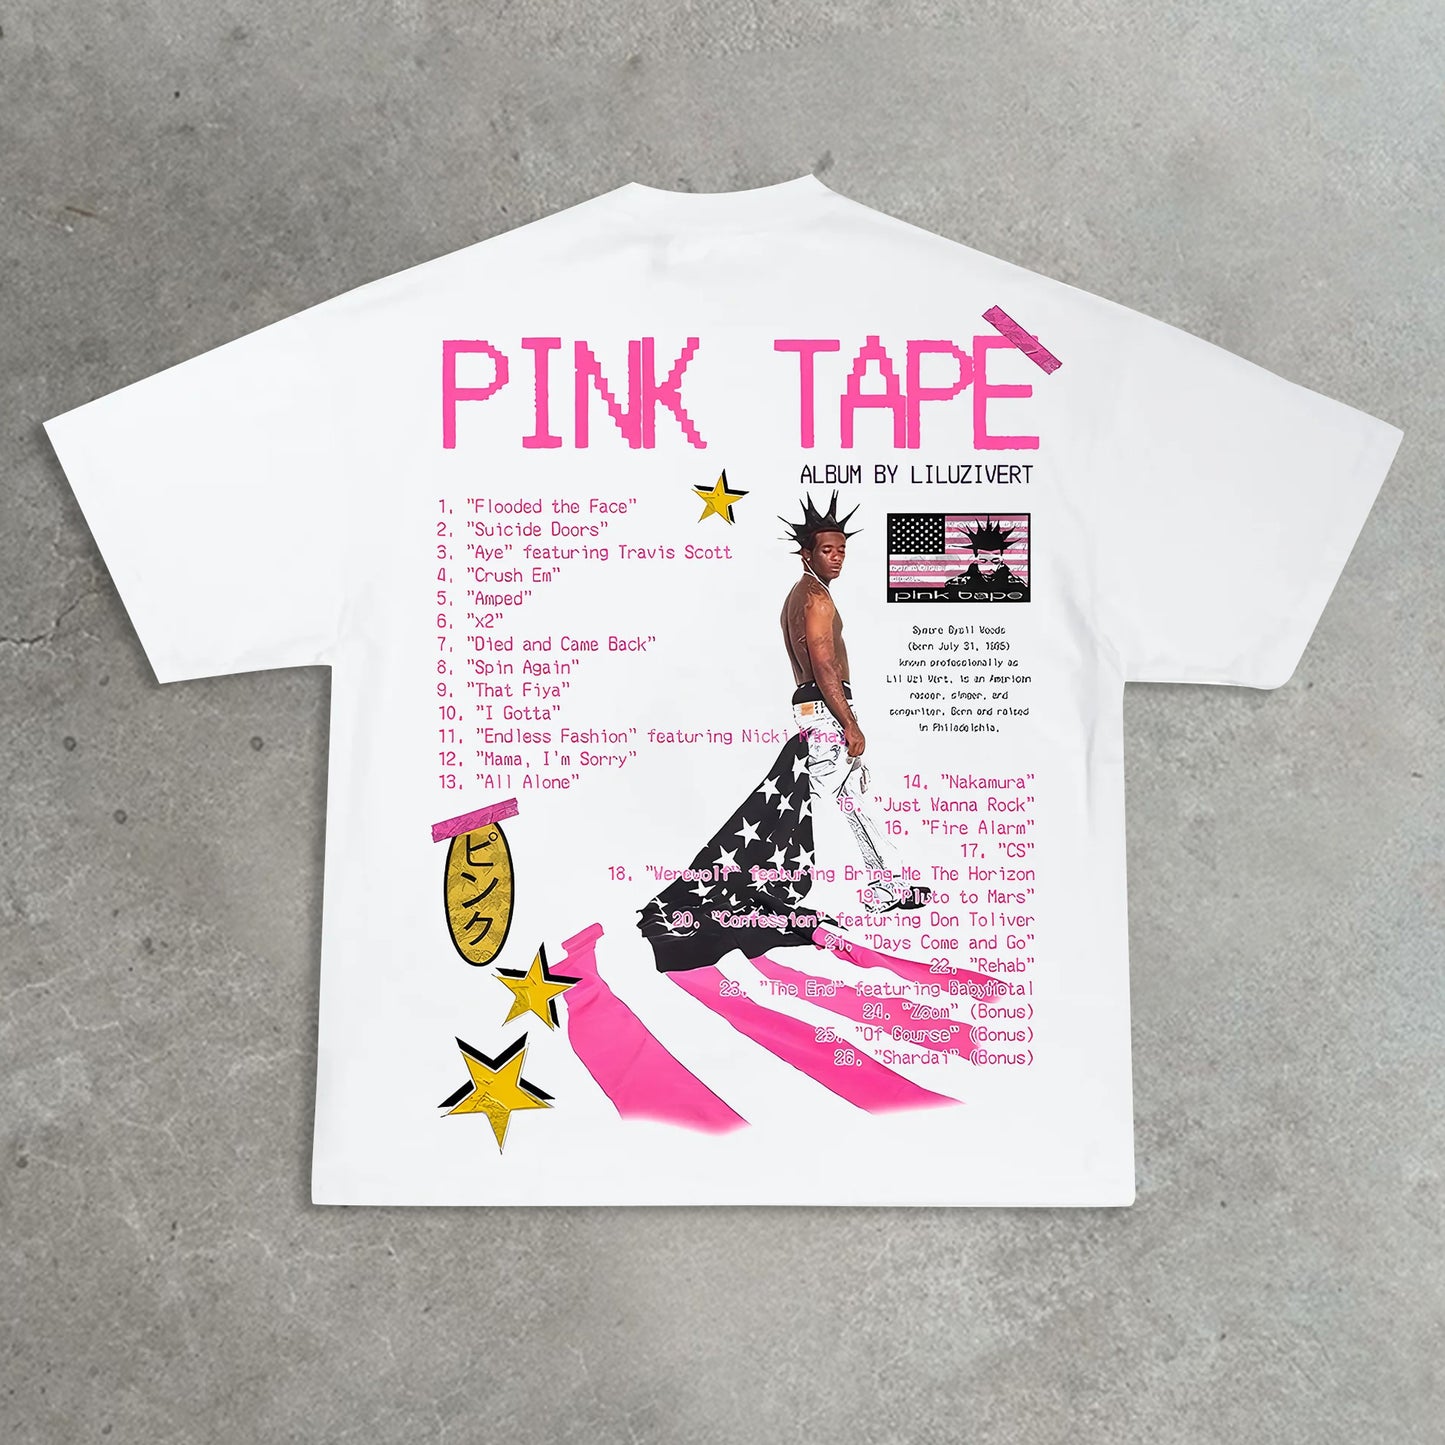 Rapper printed cotton T-shirt